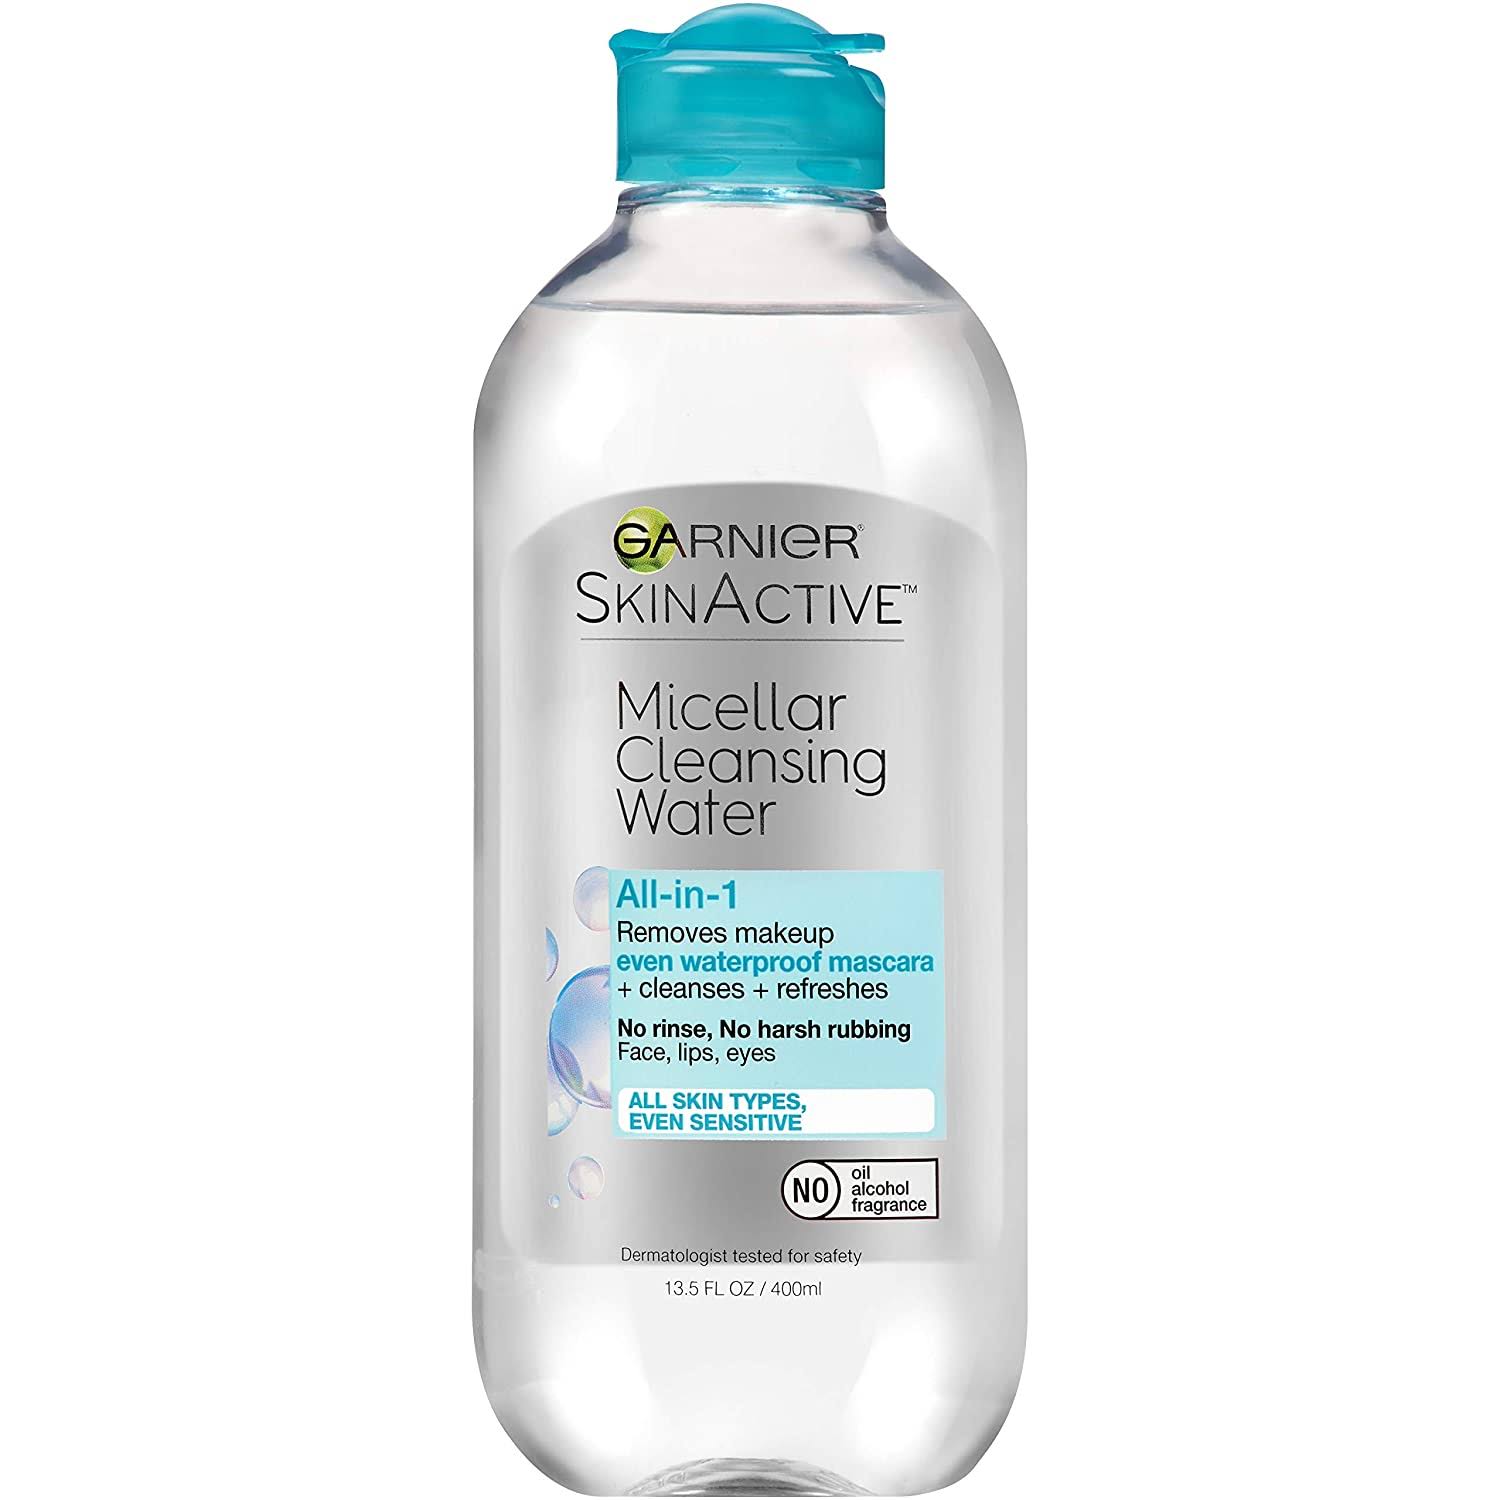 Garnier Skin Active All-in-1 Micellar Cleansing Water - 13.5 oz